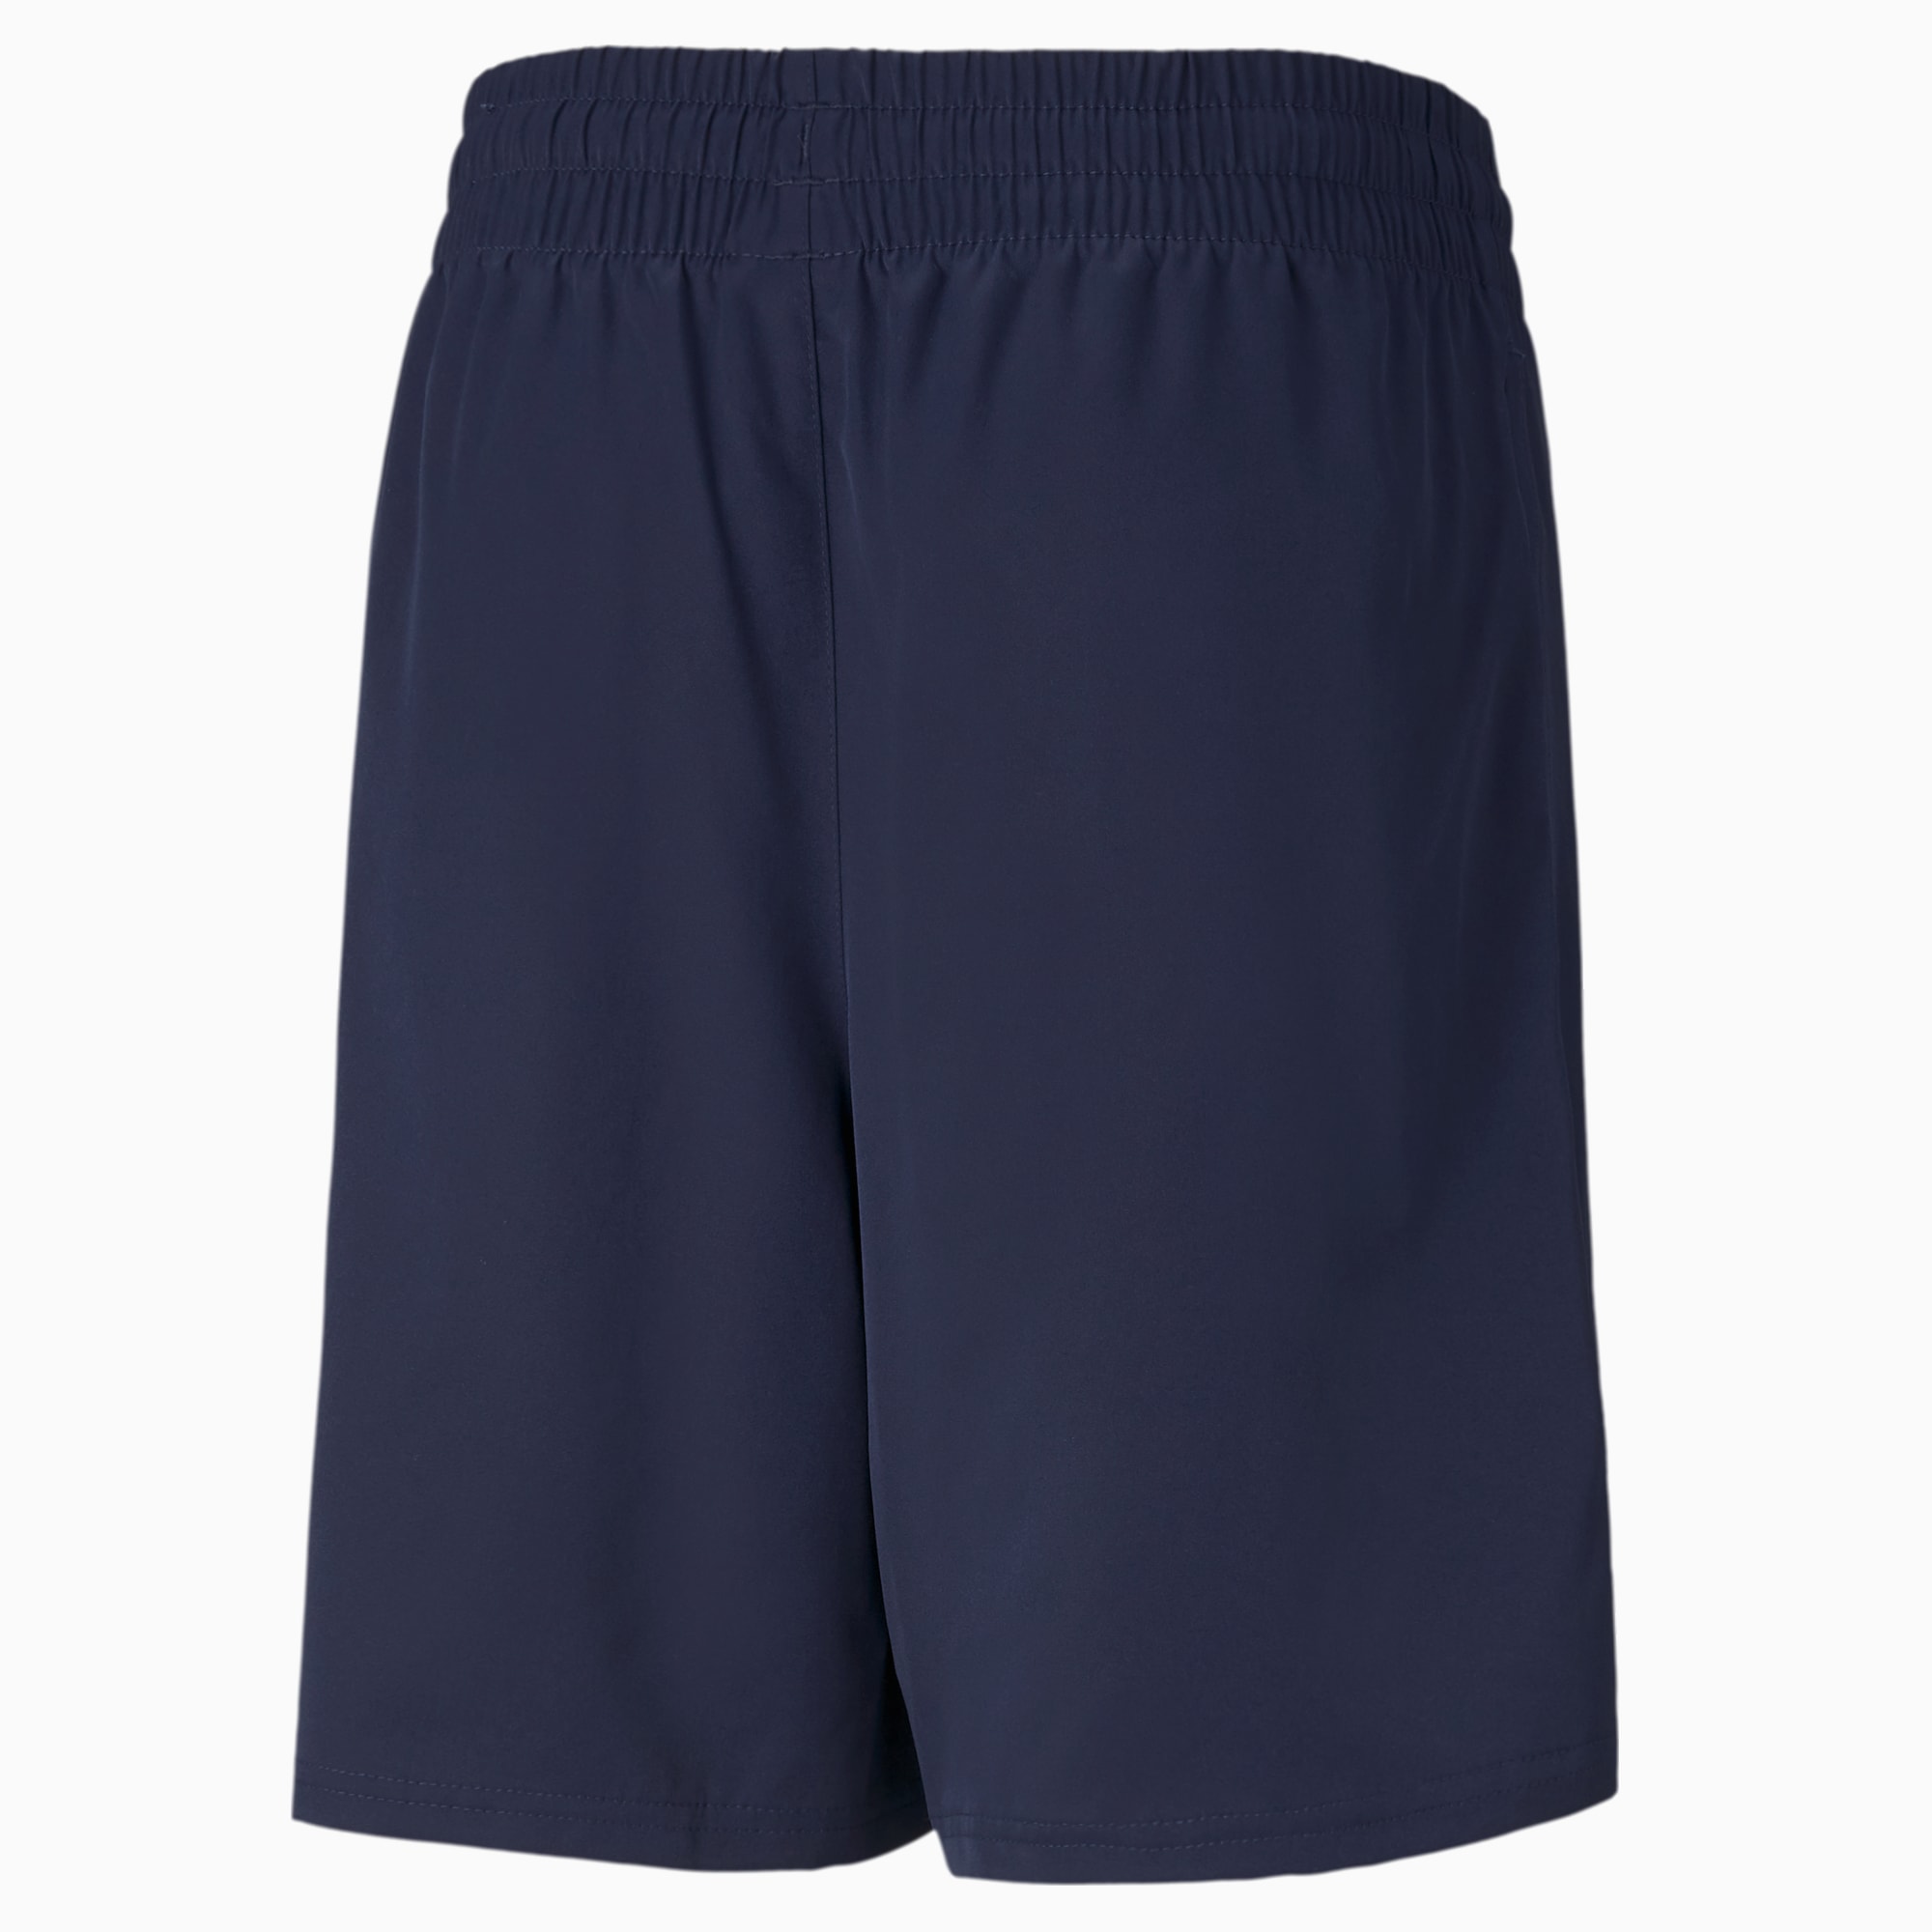 PUMA Performance Woven 7” Men's Training Shorts, Peacoat, Size XS, Clothing